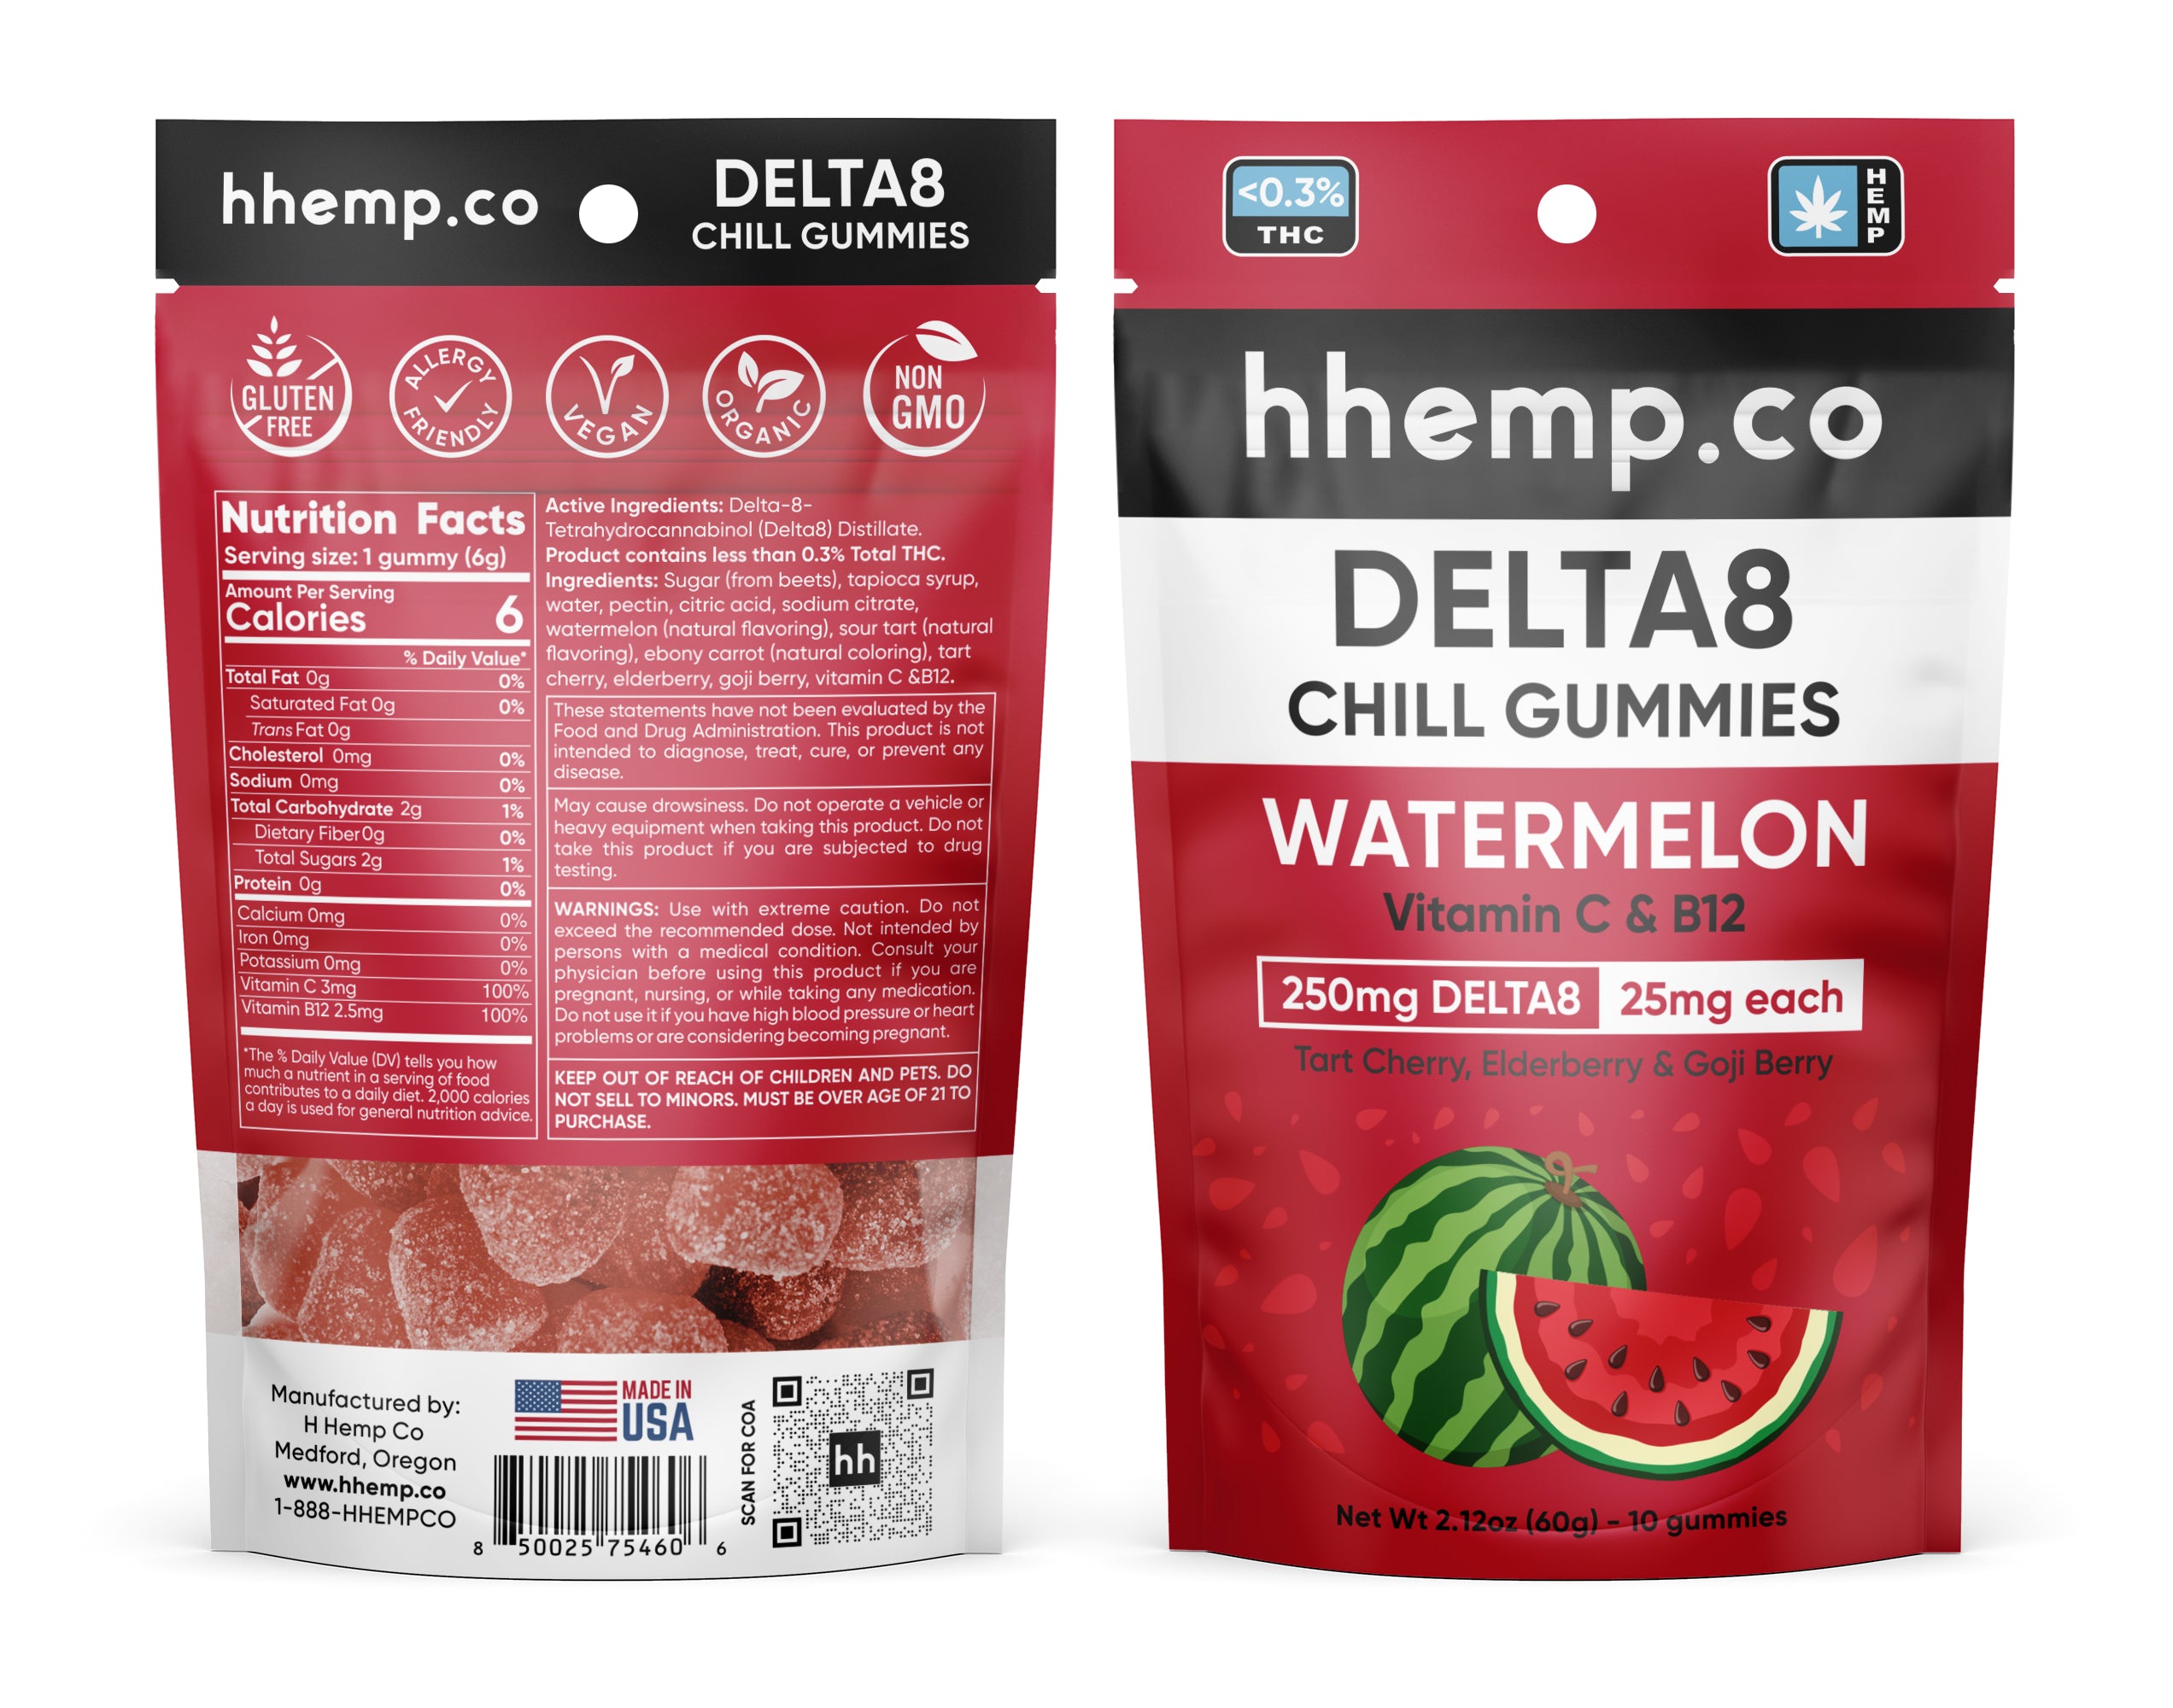 hhemp.co Delta 8 Chill Gummies 10/pk - Watermelon (25mg) - H H HARVEST CO